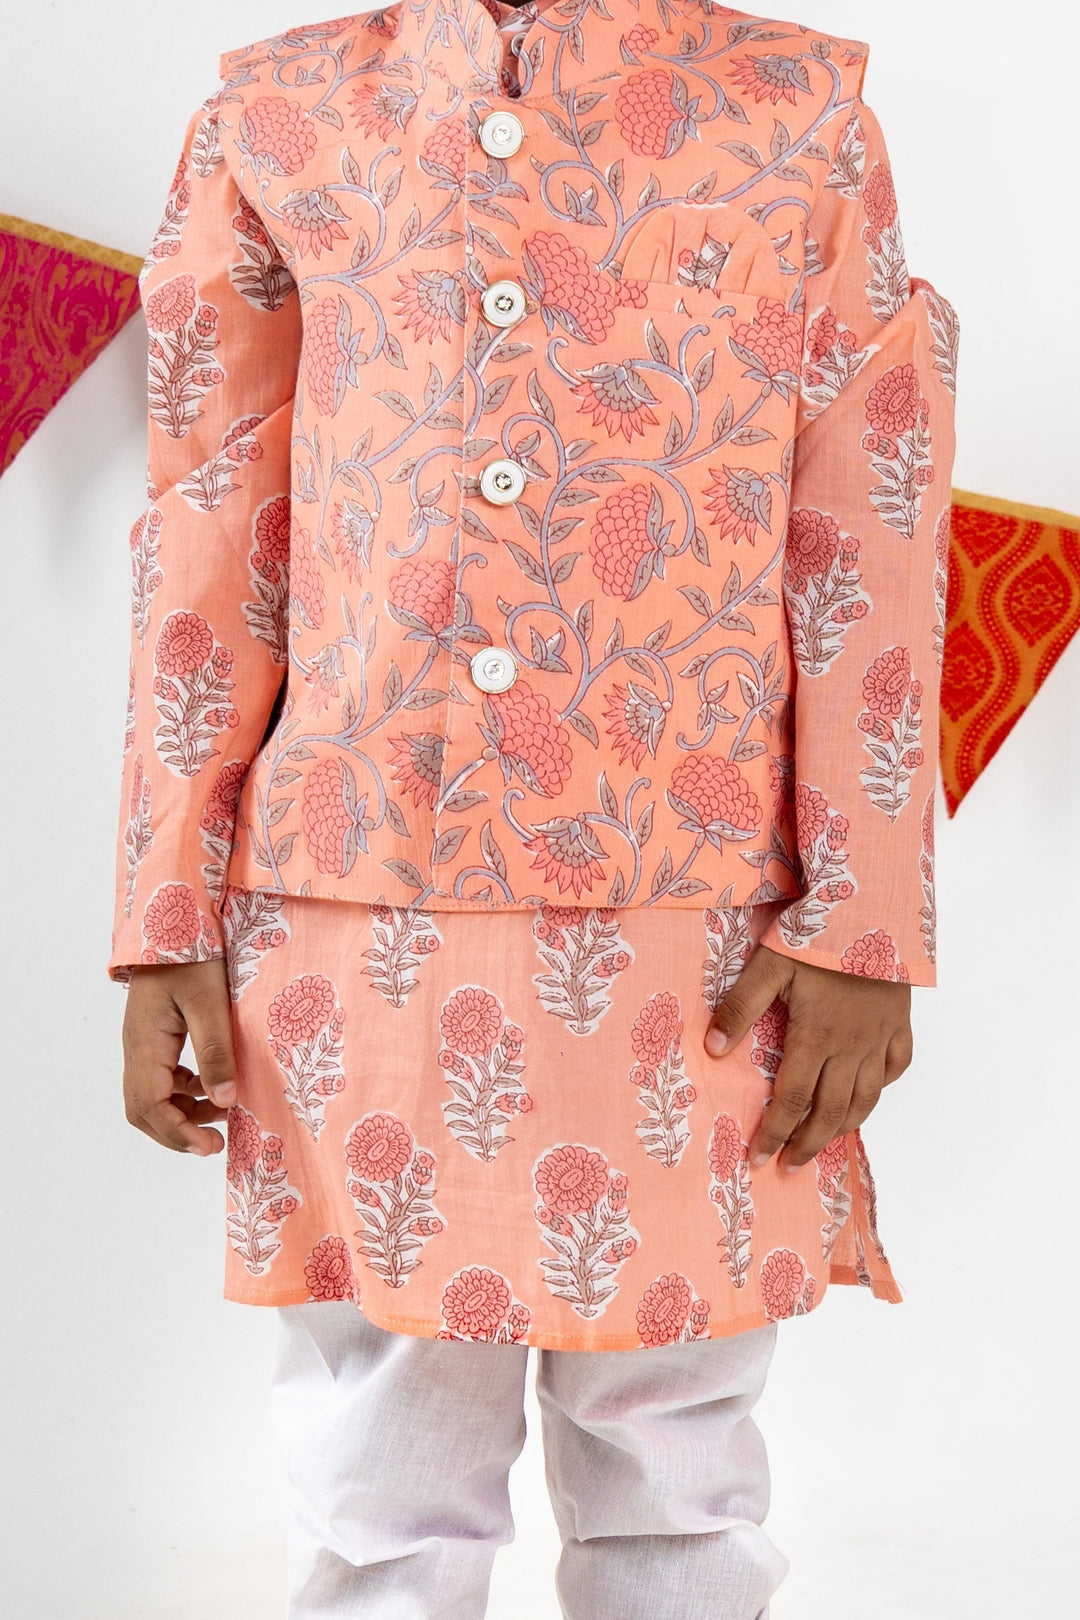 The Nesavu Ethnic Sets Floral Printed Pure Soft Cotton Orange Readymade Kurta For Boys psr silks Nesavu